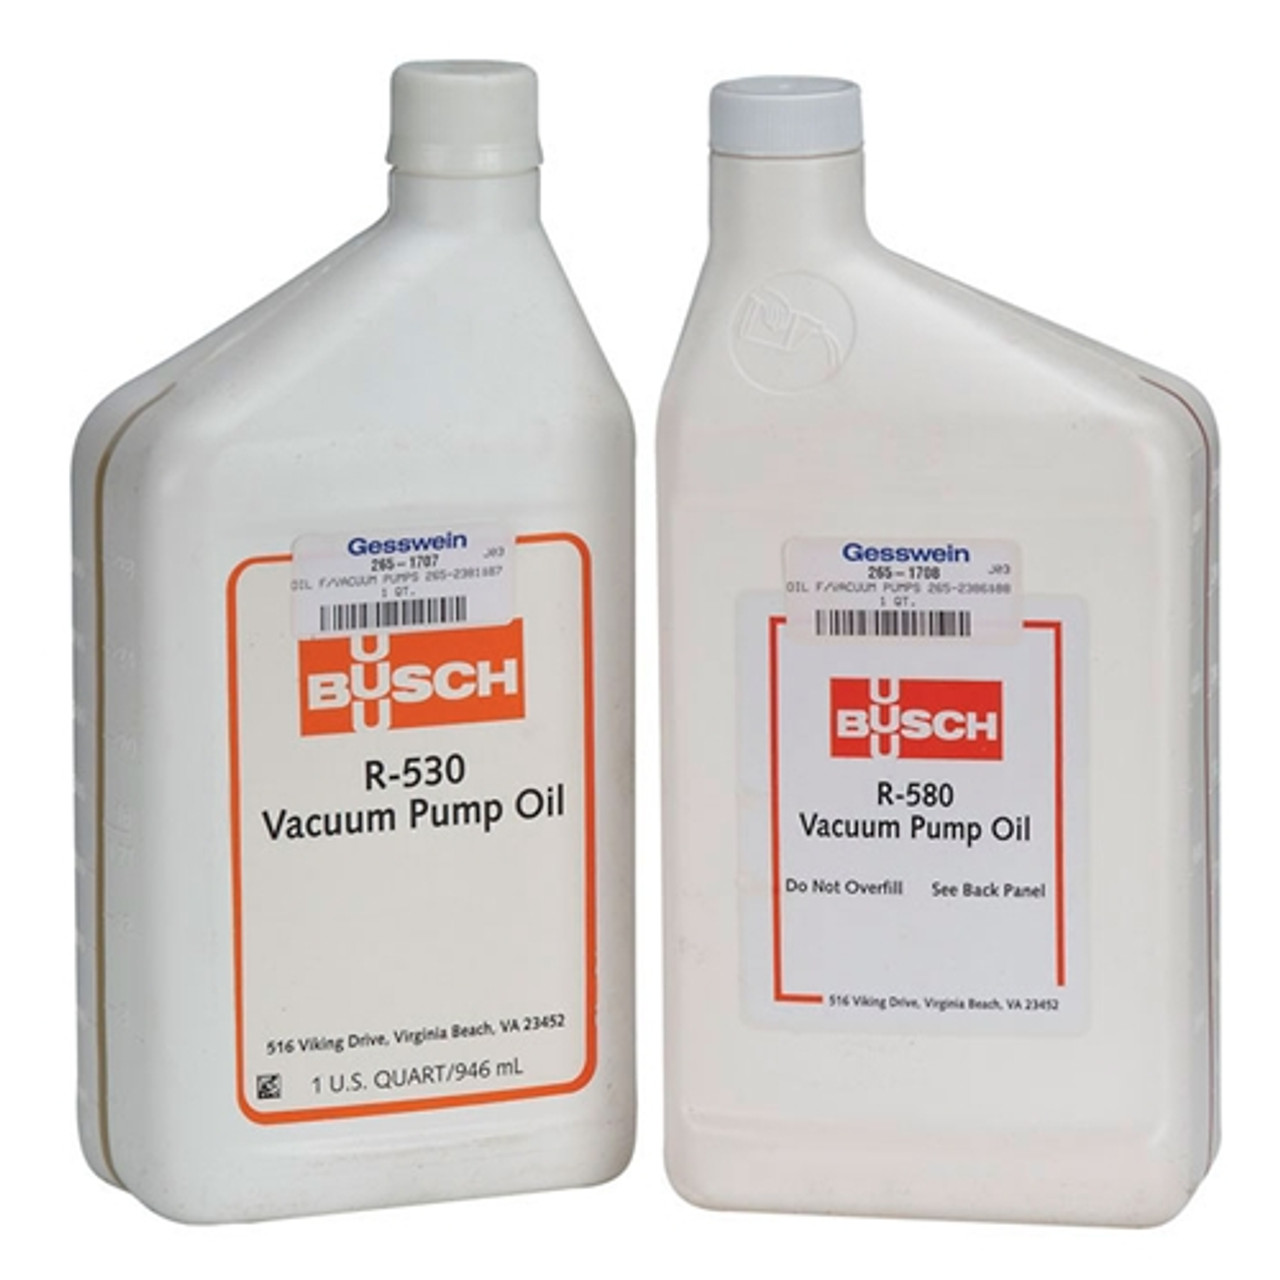 Busch Vacuum Pump Oil - #28, 1 Quart